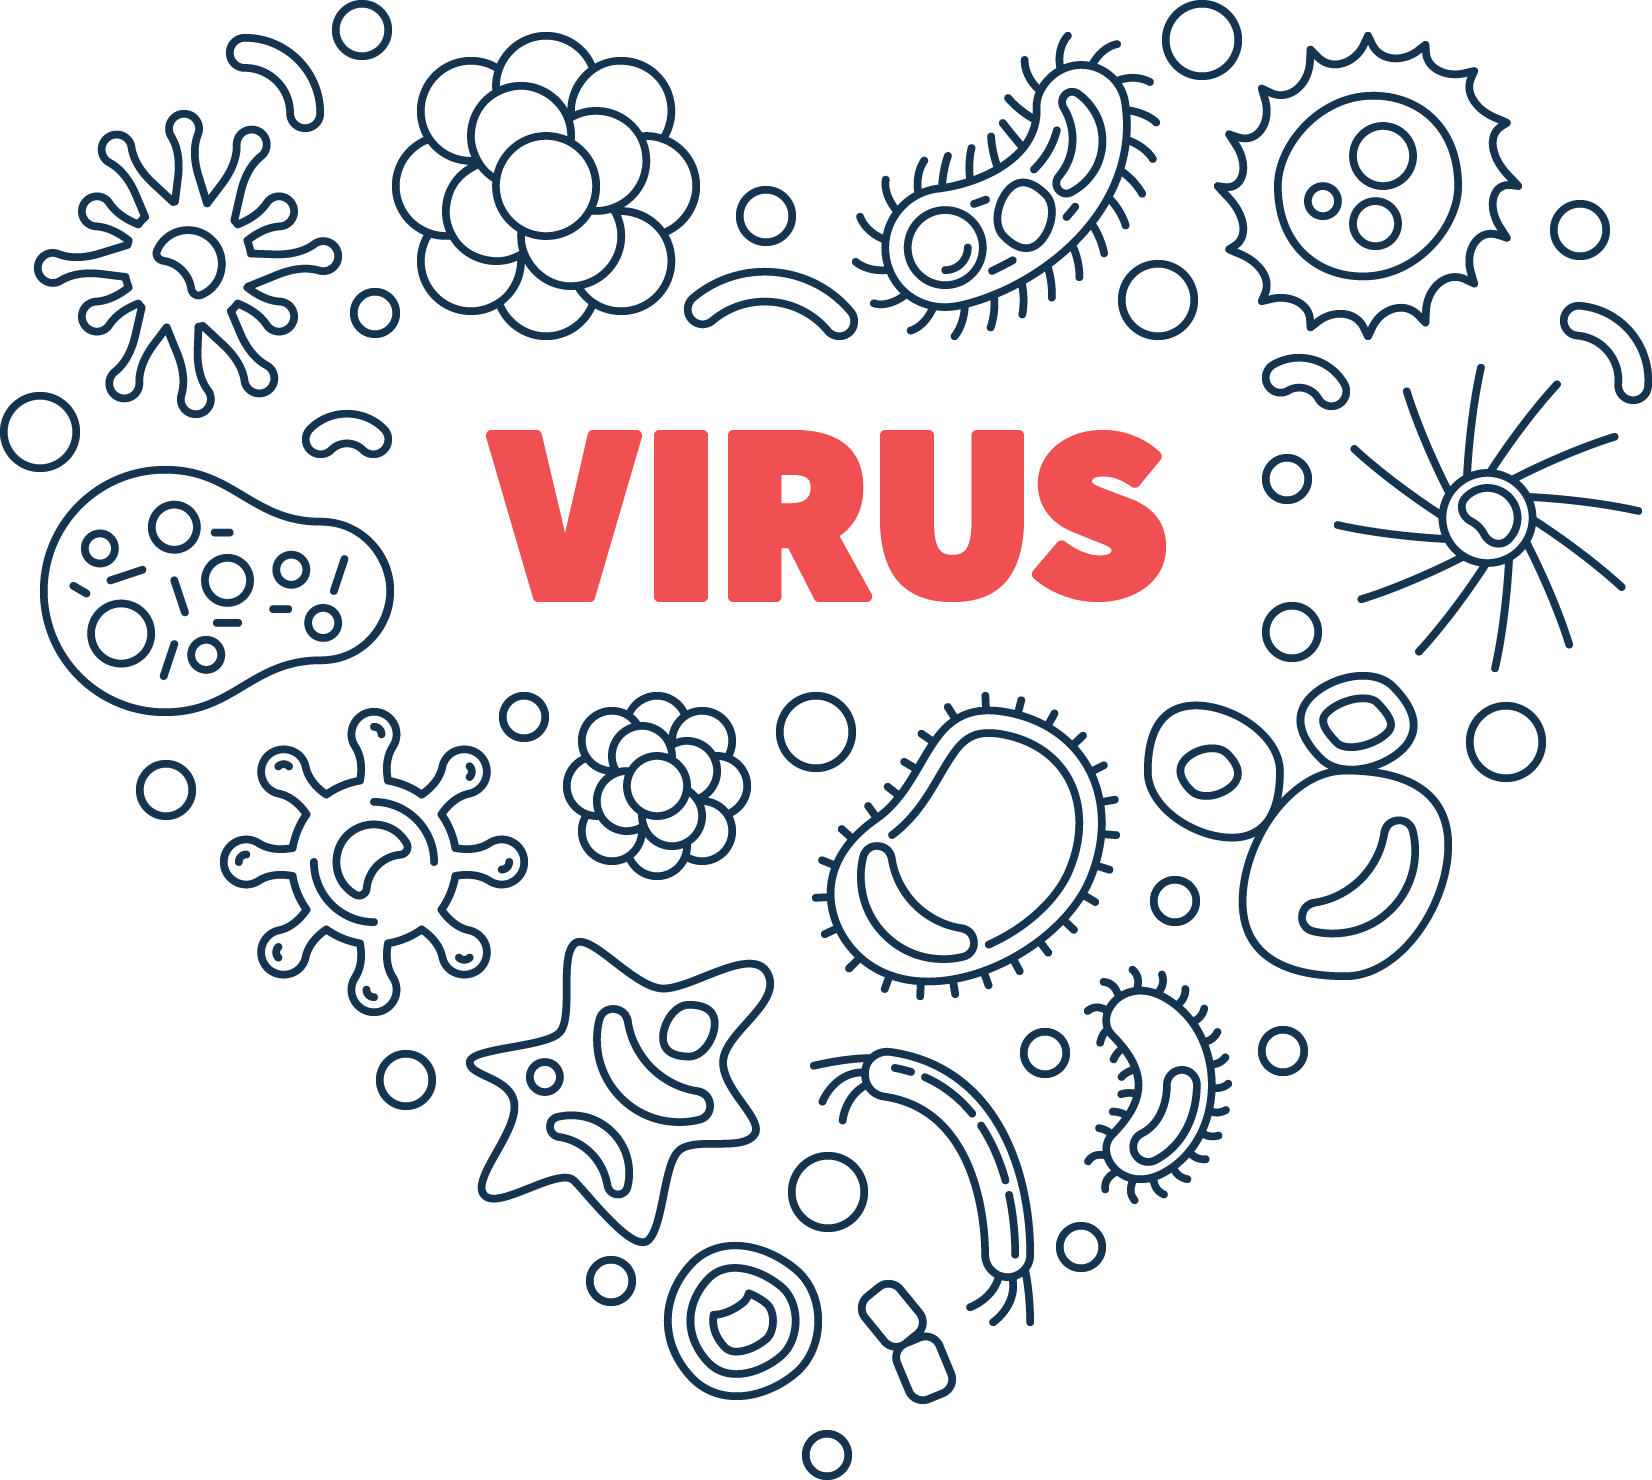 "Virus" written in bright red among many molecular viruses in the shape of love heart